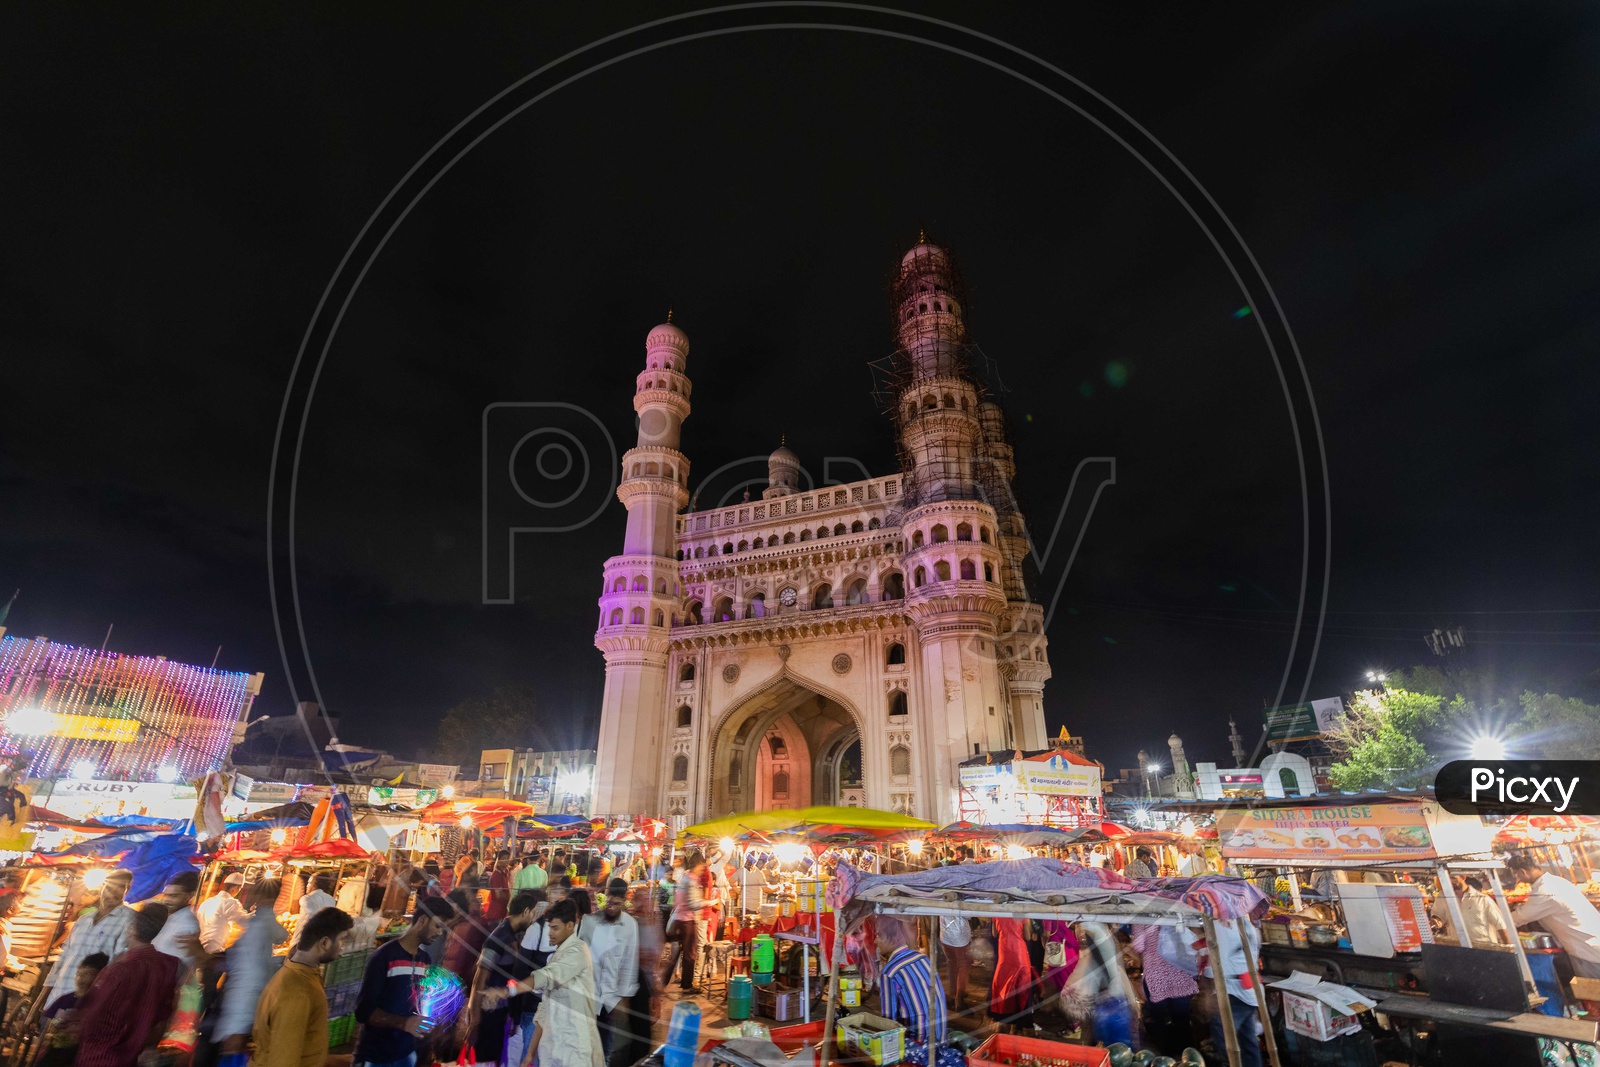 Bazaar street crowd alongside the Charminar during the night